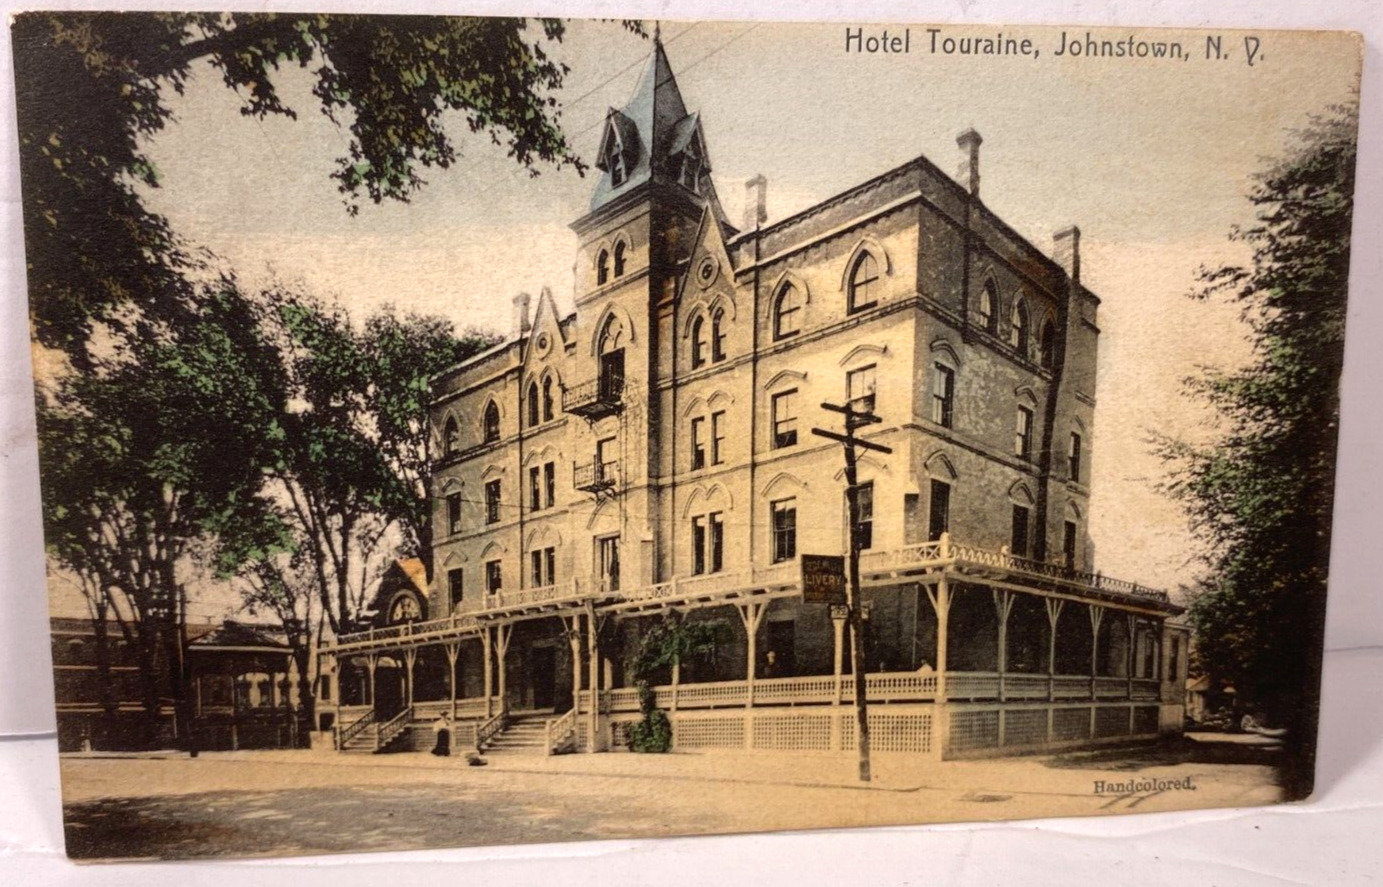 Vintage Johnstown, N.Y. Postcard - Hotel Touraine Handcolored 1907 Postcard